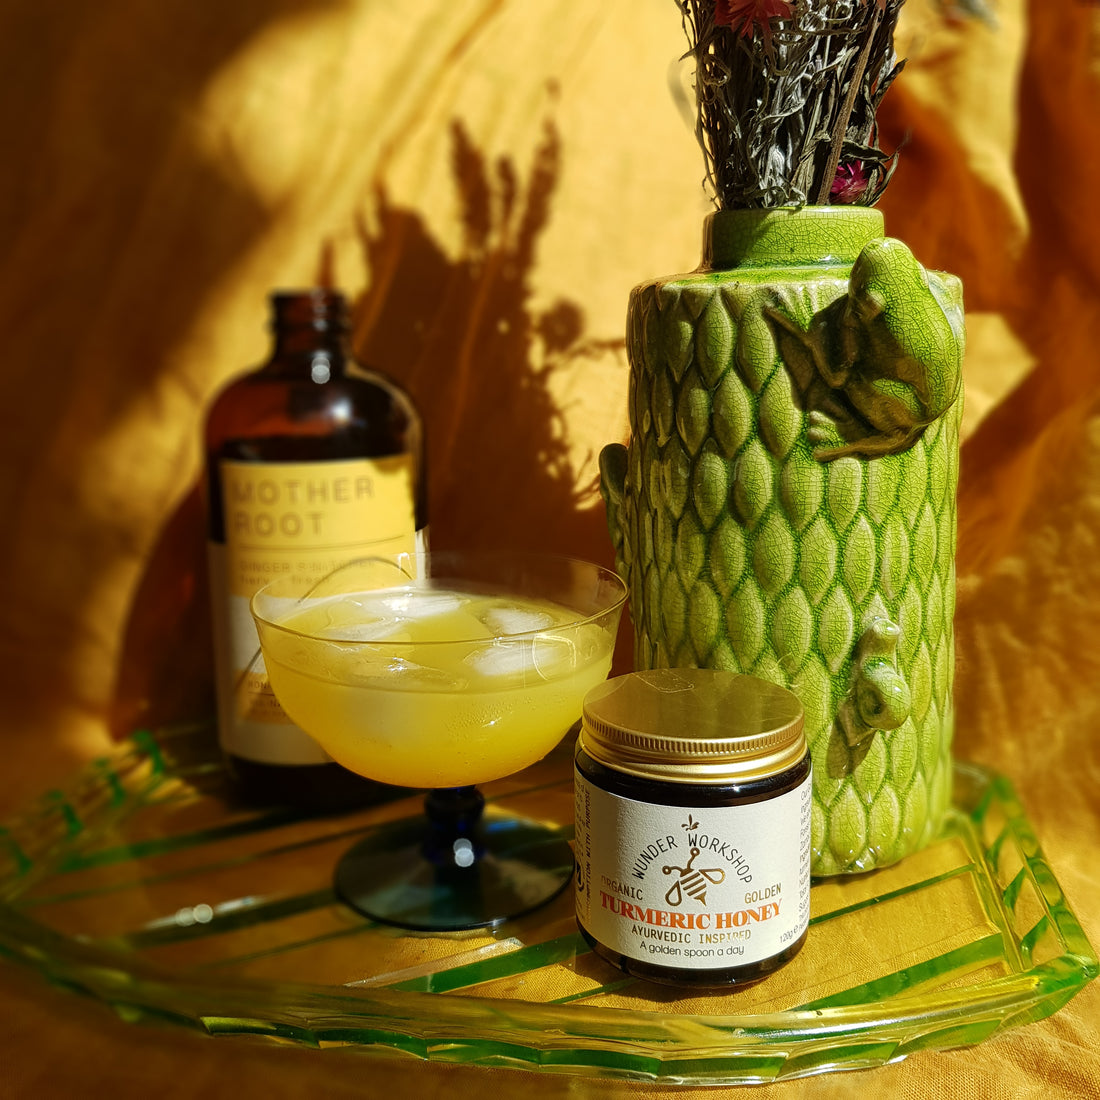 Sparkling Golden Honey Elixir with Mother Root